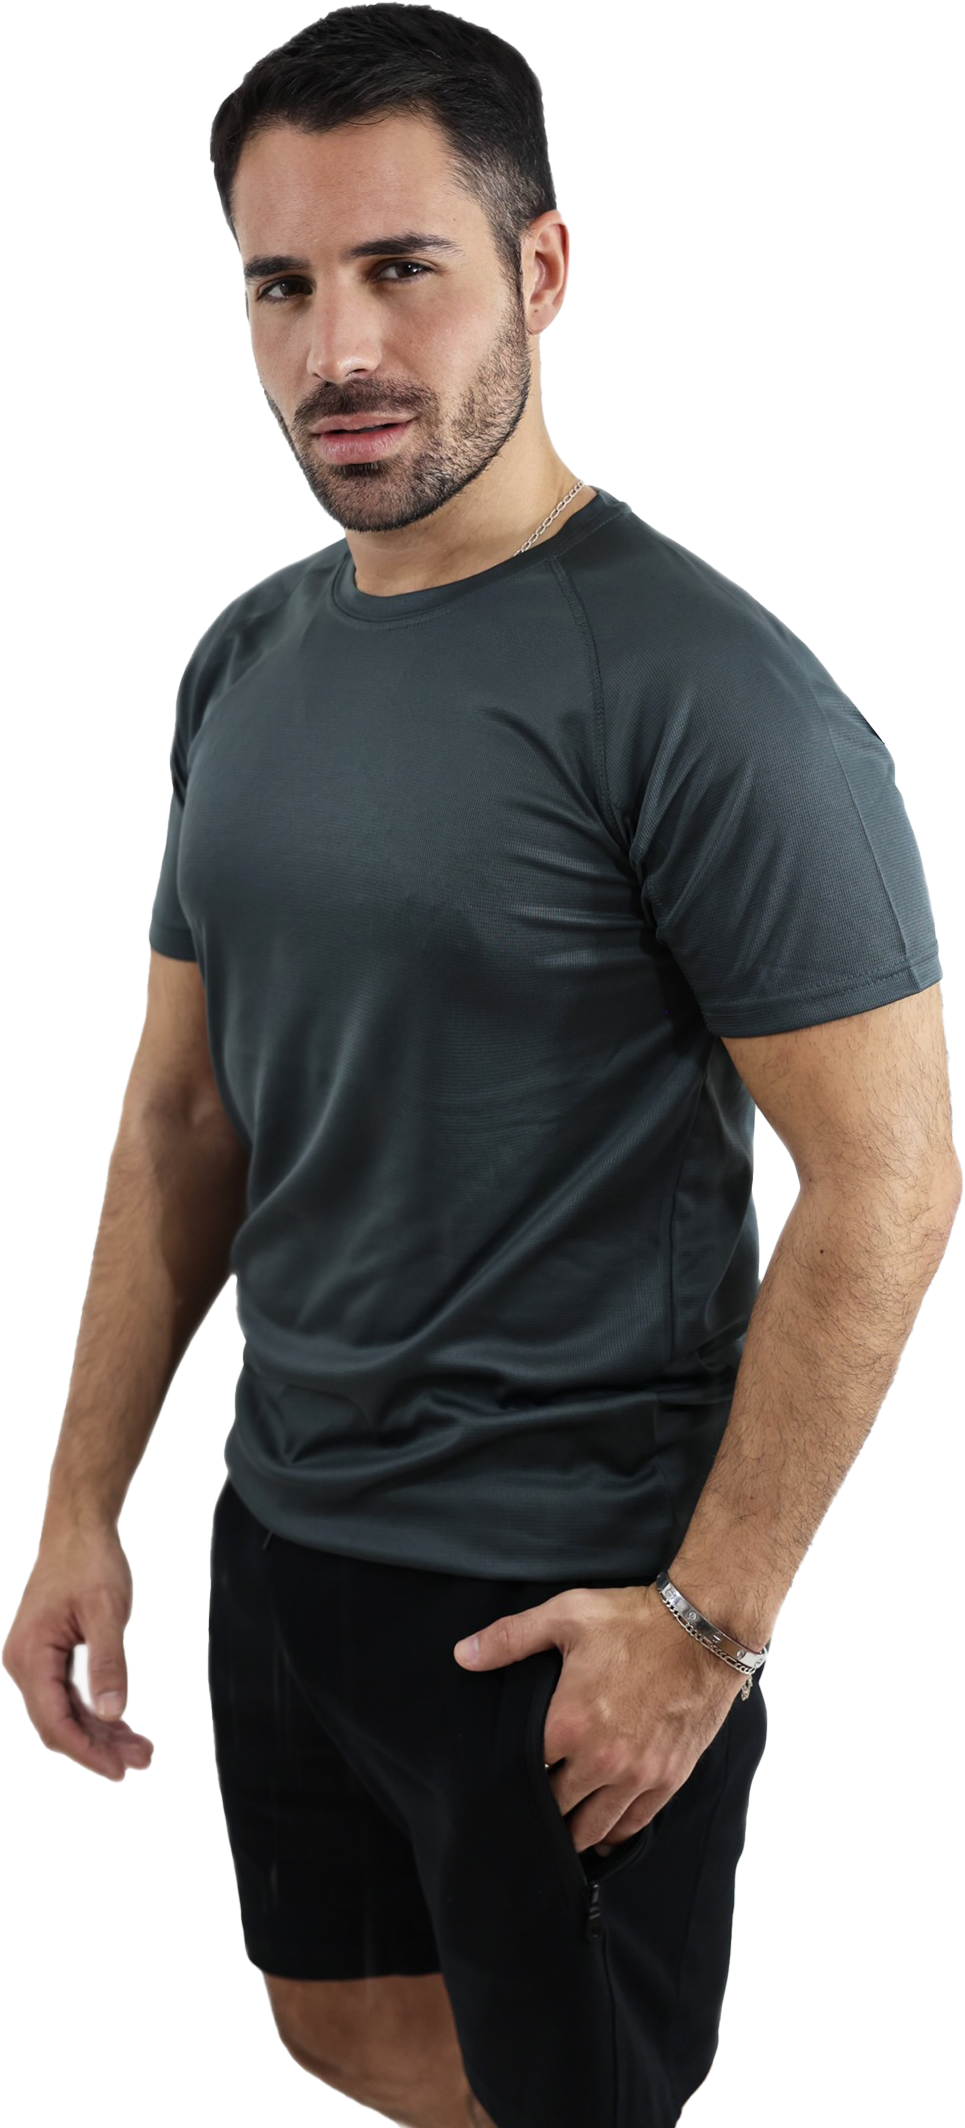 Camiseta Técnica Deporte Hombre Manga Corta - Transpirable